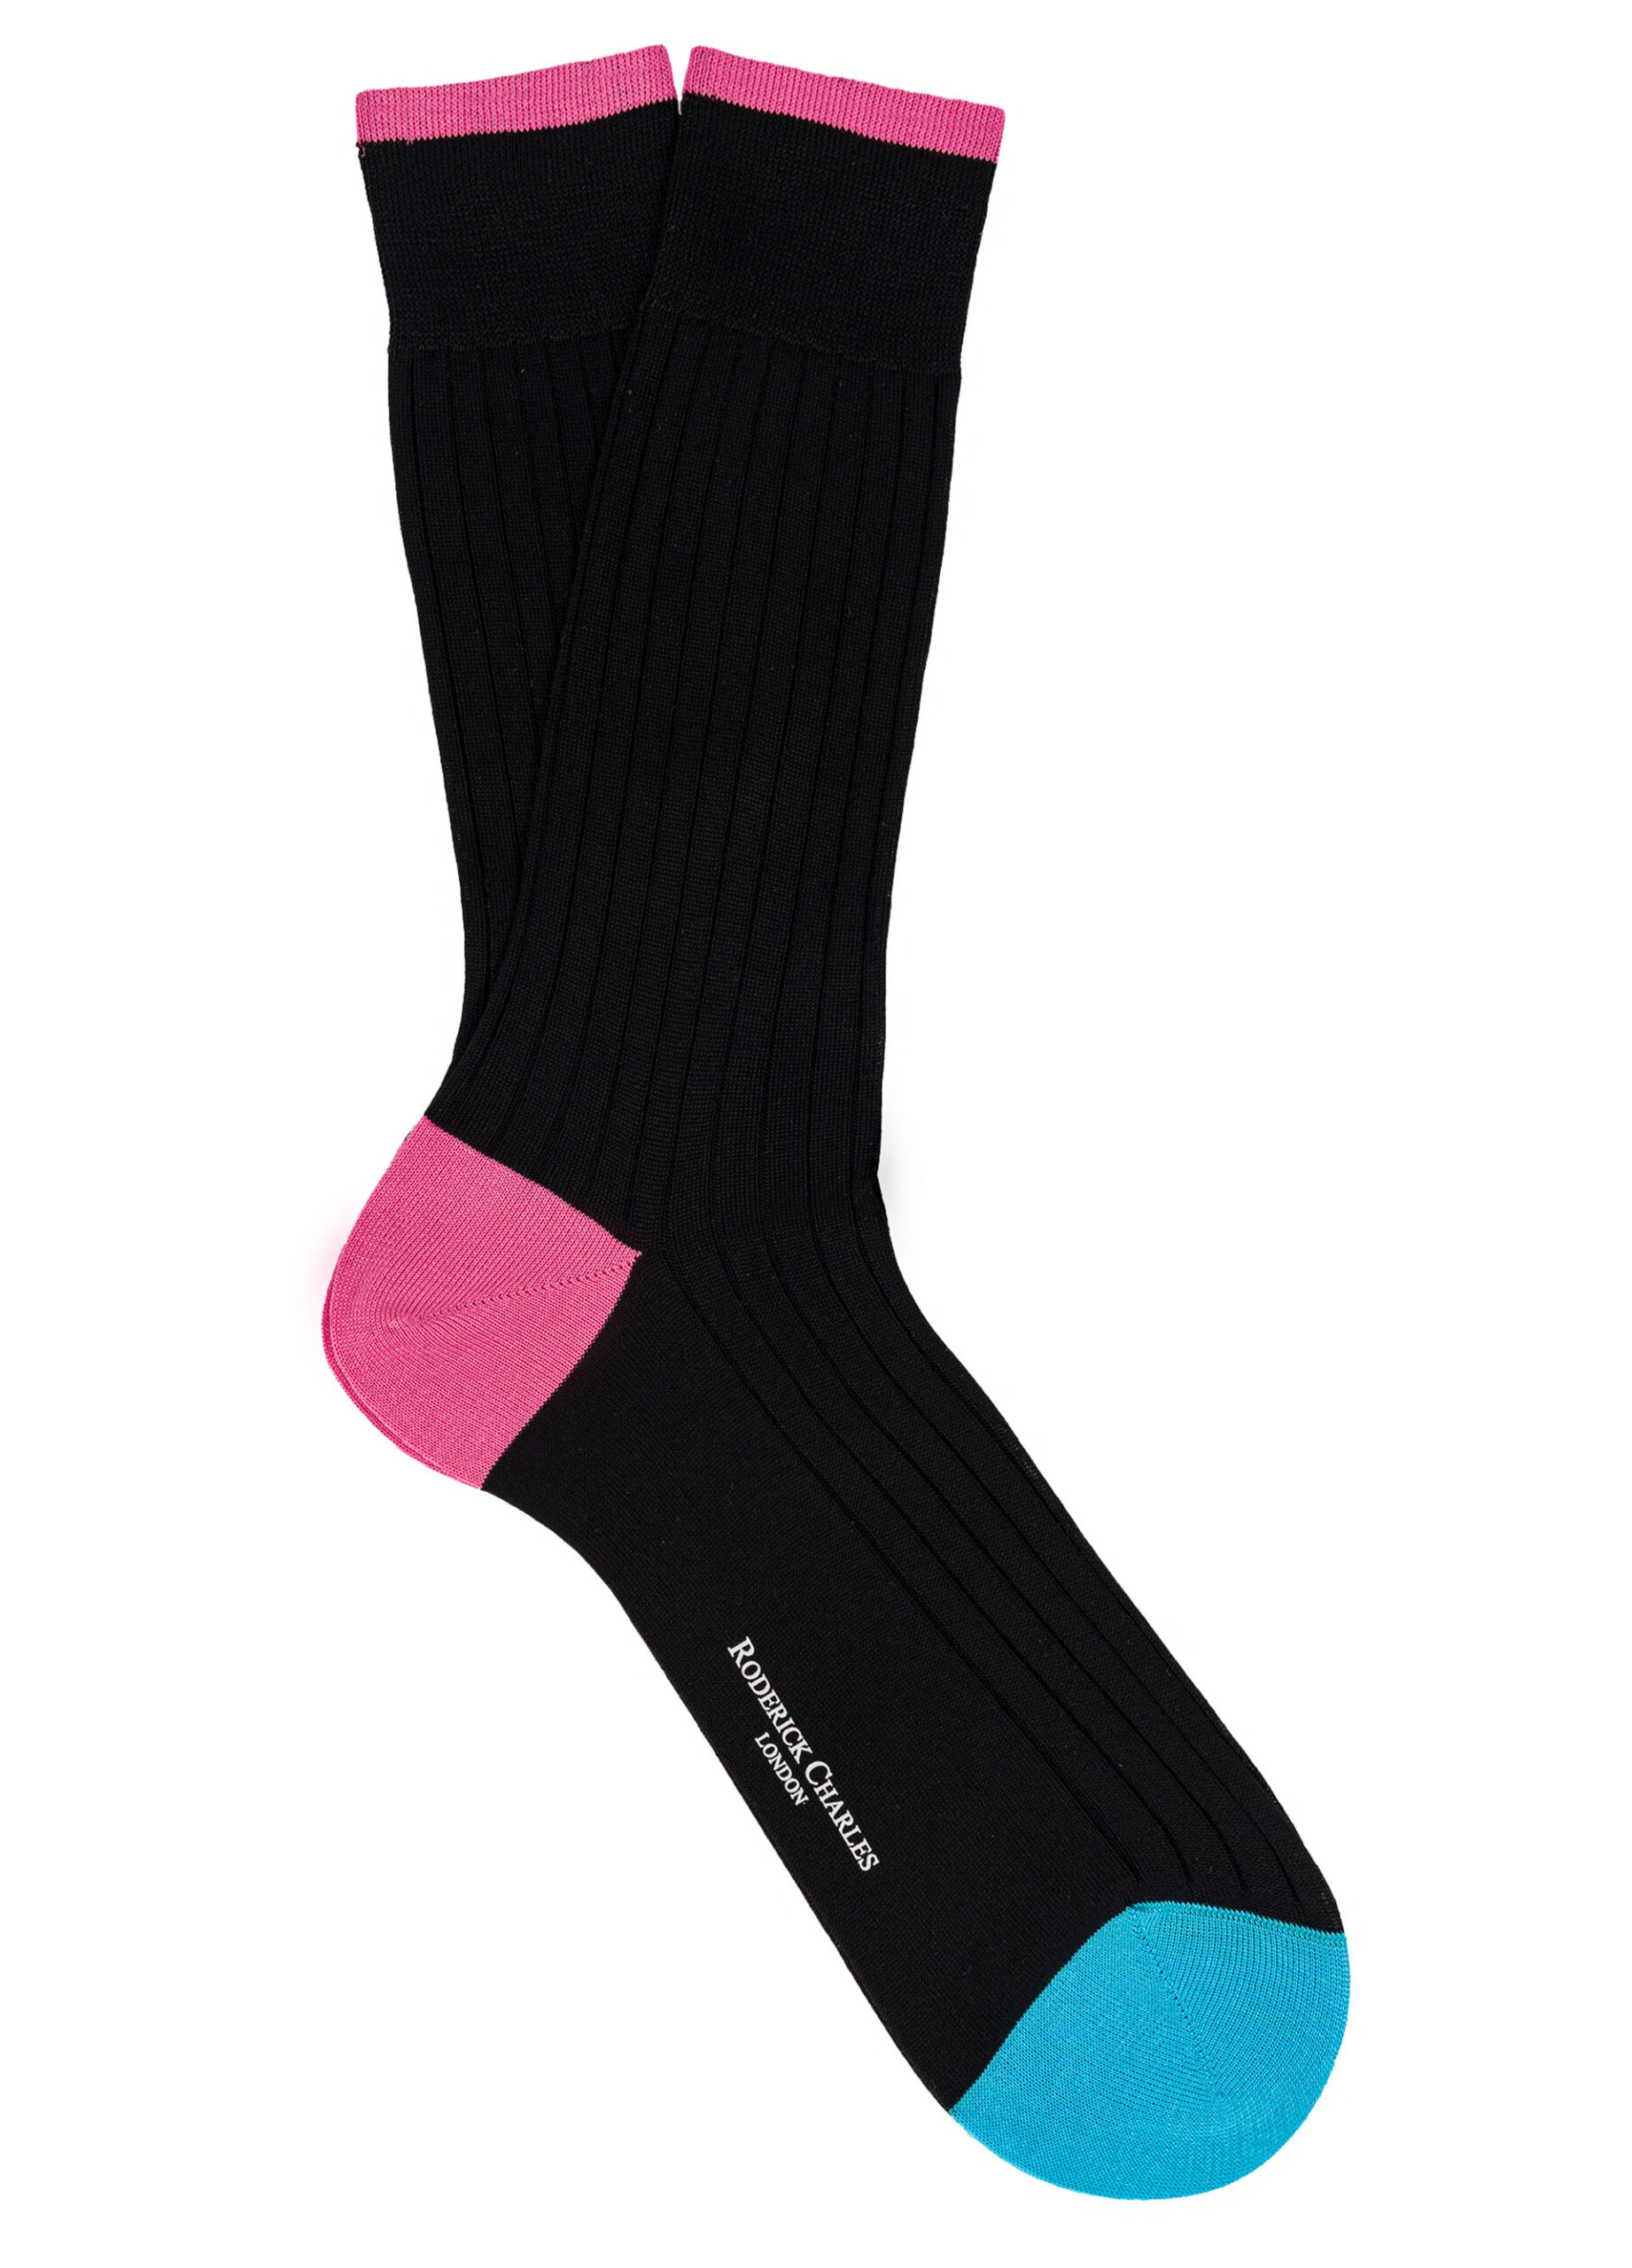 Black and pink egyptian cotton socks